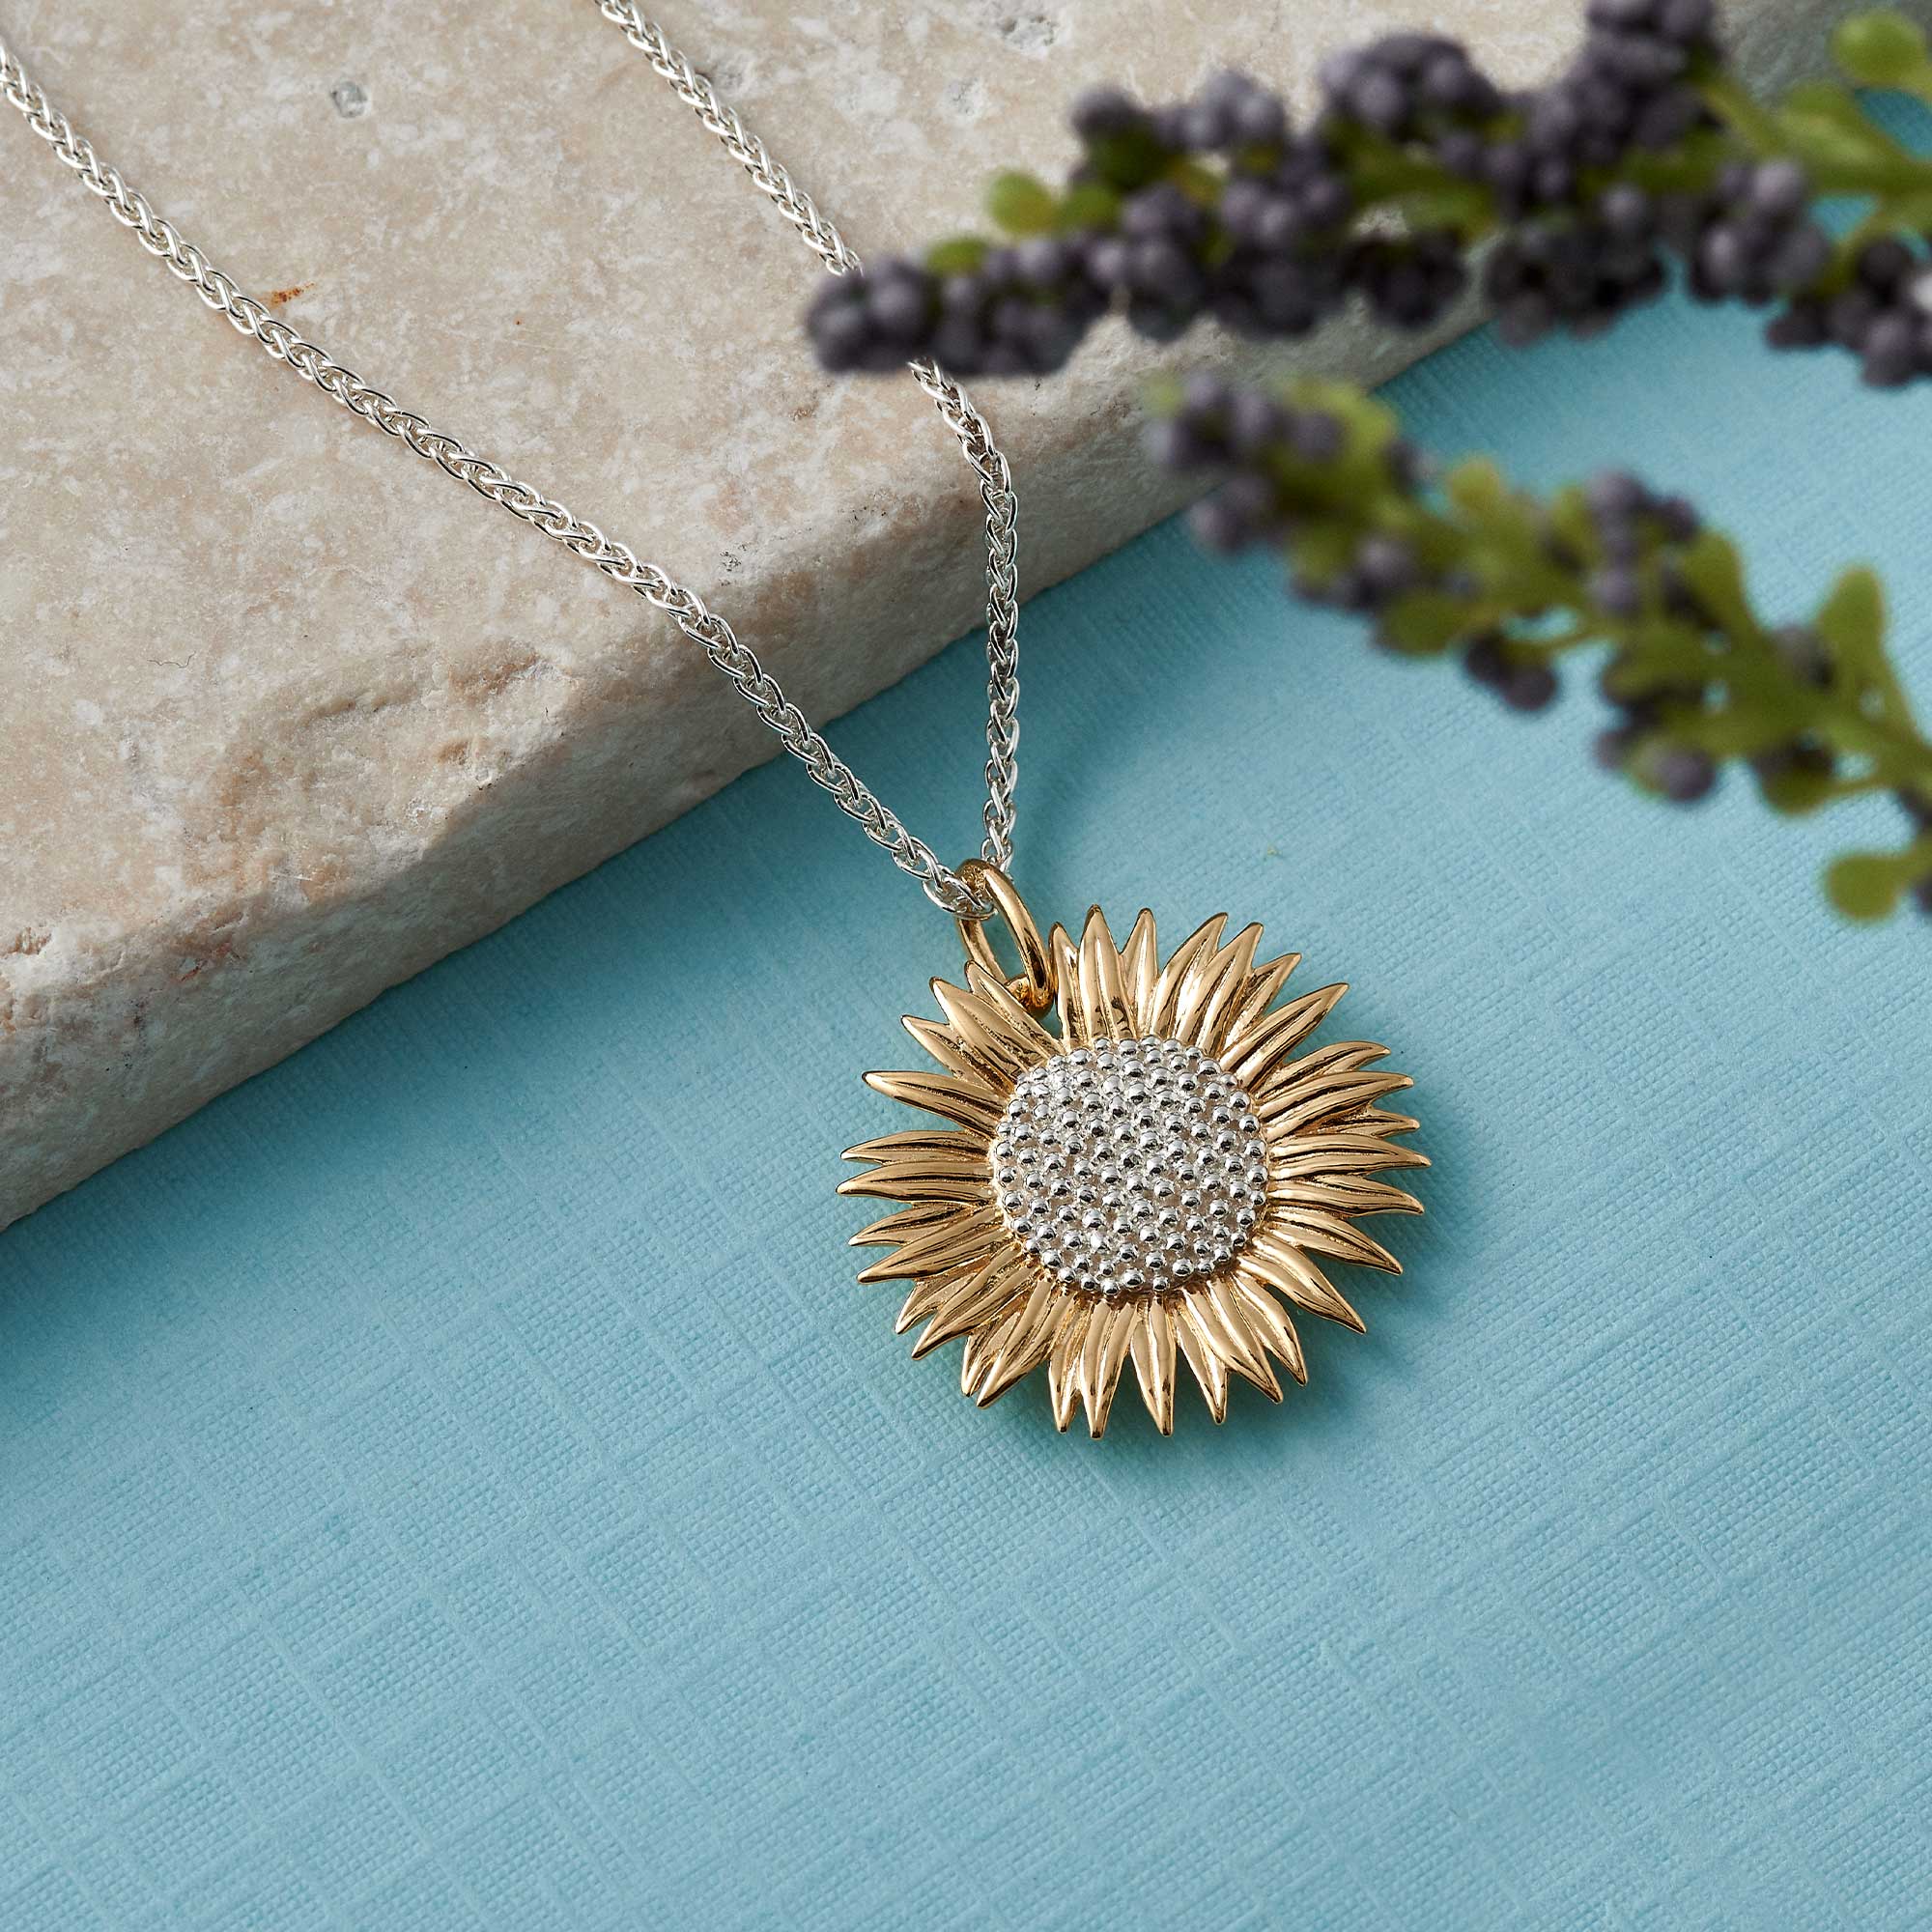 gold vermeil 18k sunflower pendant necklace jewellery made in uk